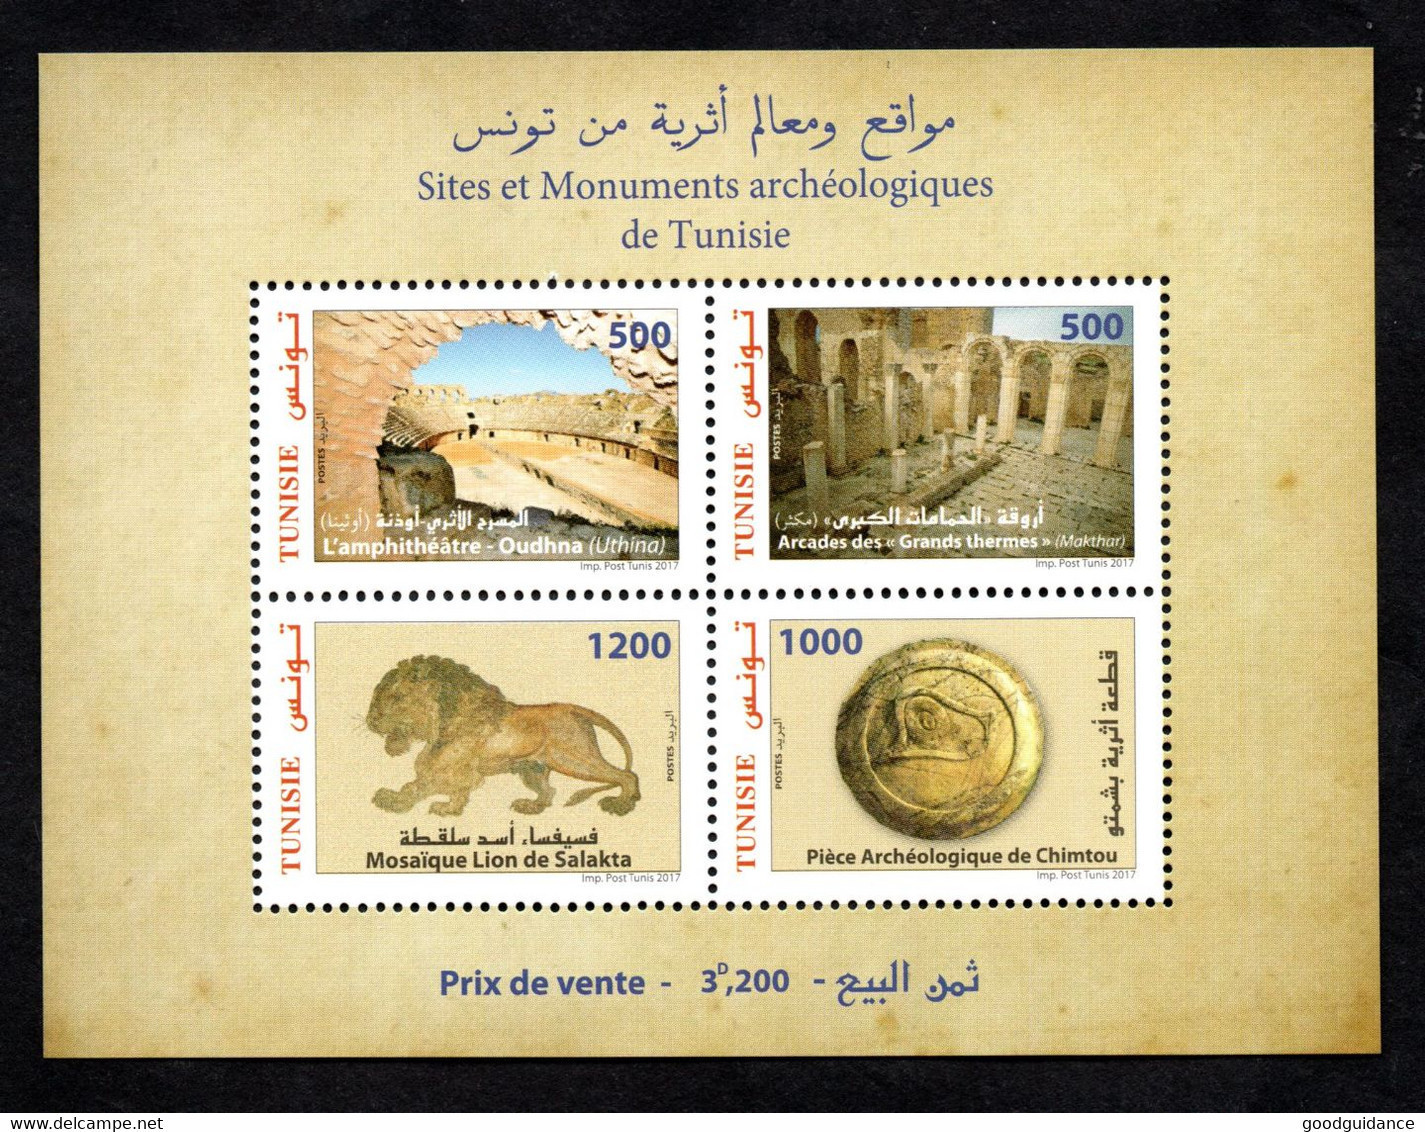 2017- Tunisia- Tunisie- Archeological Sites And Monuments- Sites Et Monuments Archéologiques- Minisheet - Bloc- MNH** - Tunisia